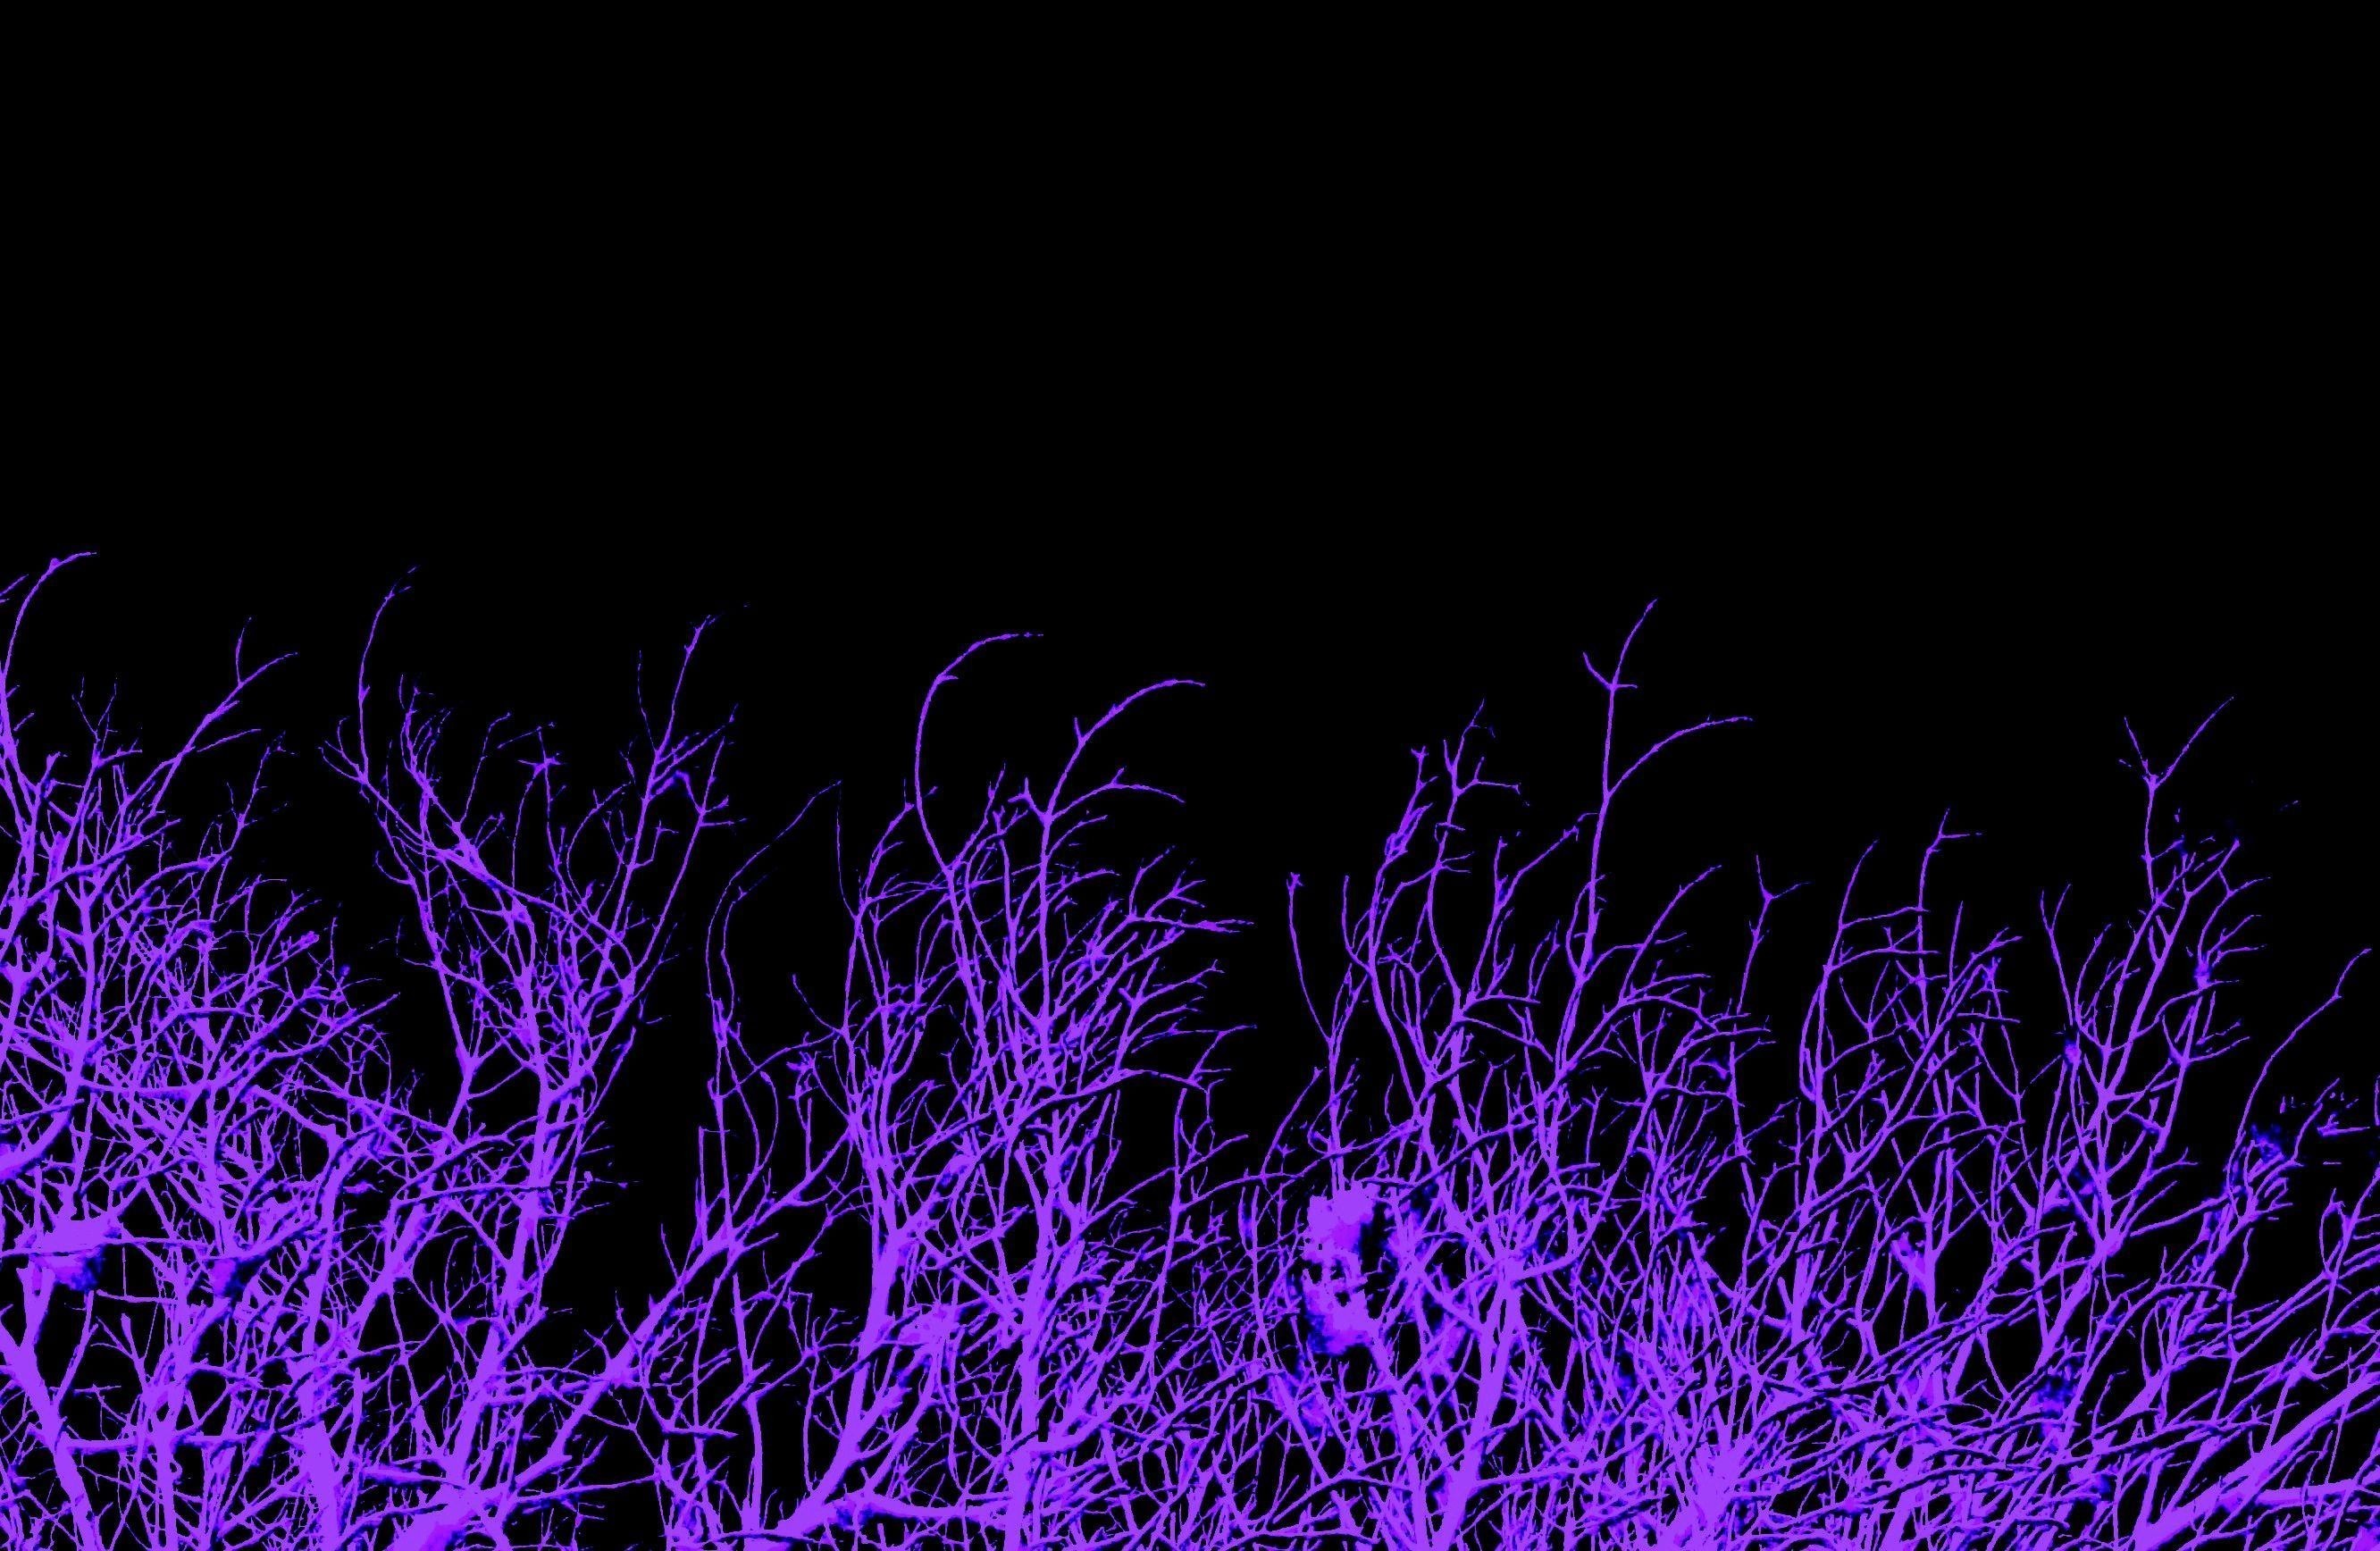 tapeten tumblr,violett,lila,schwarz,blau,licht